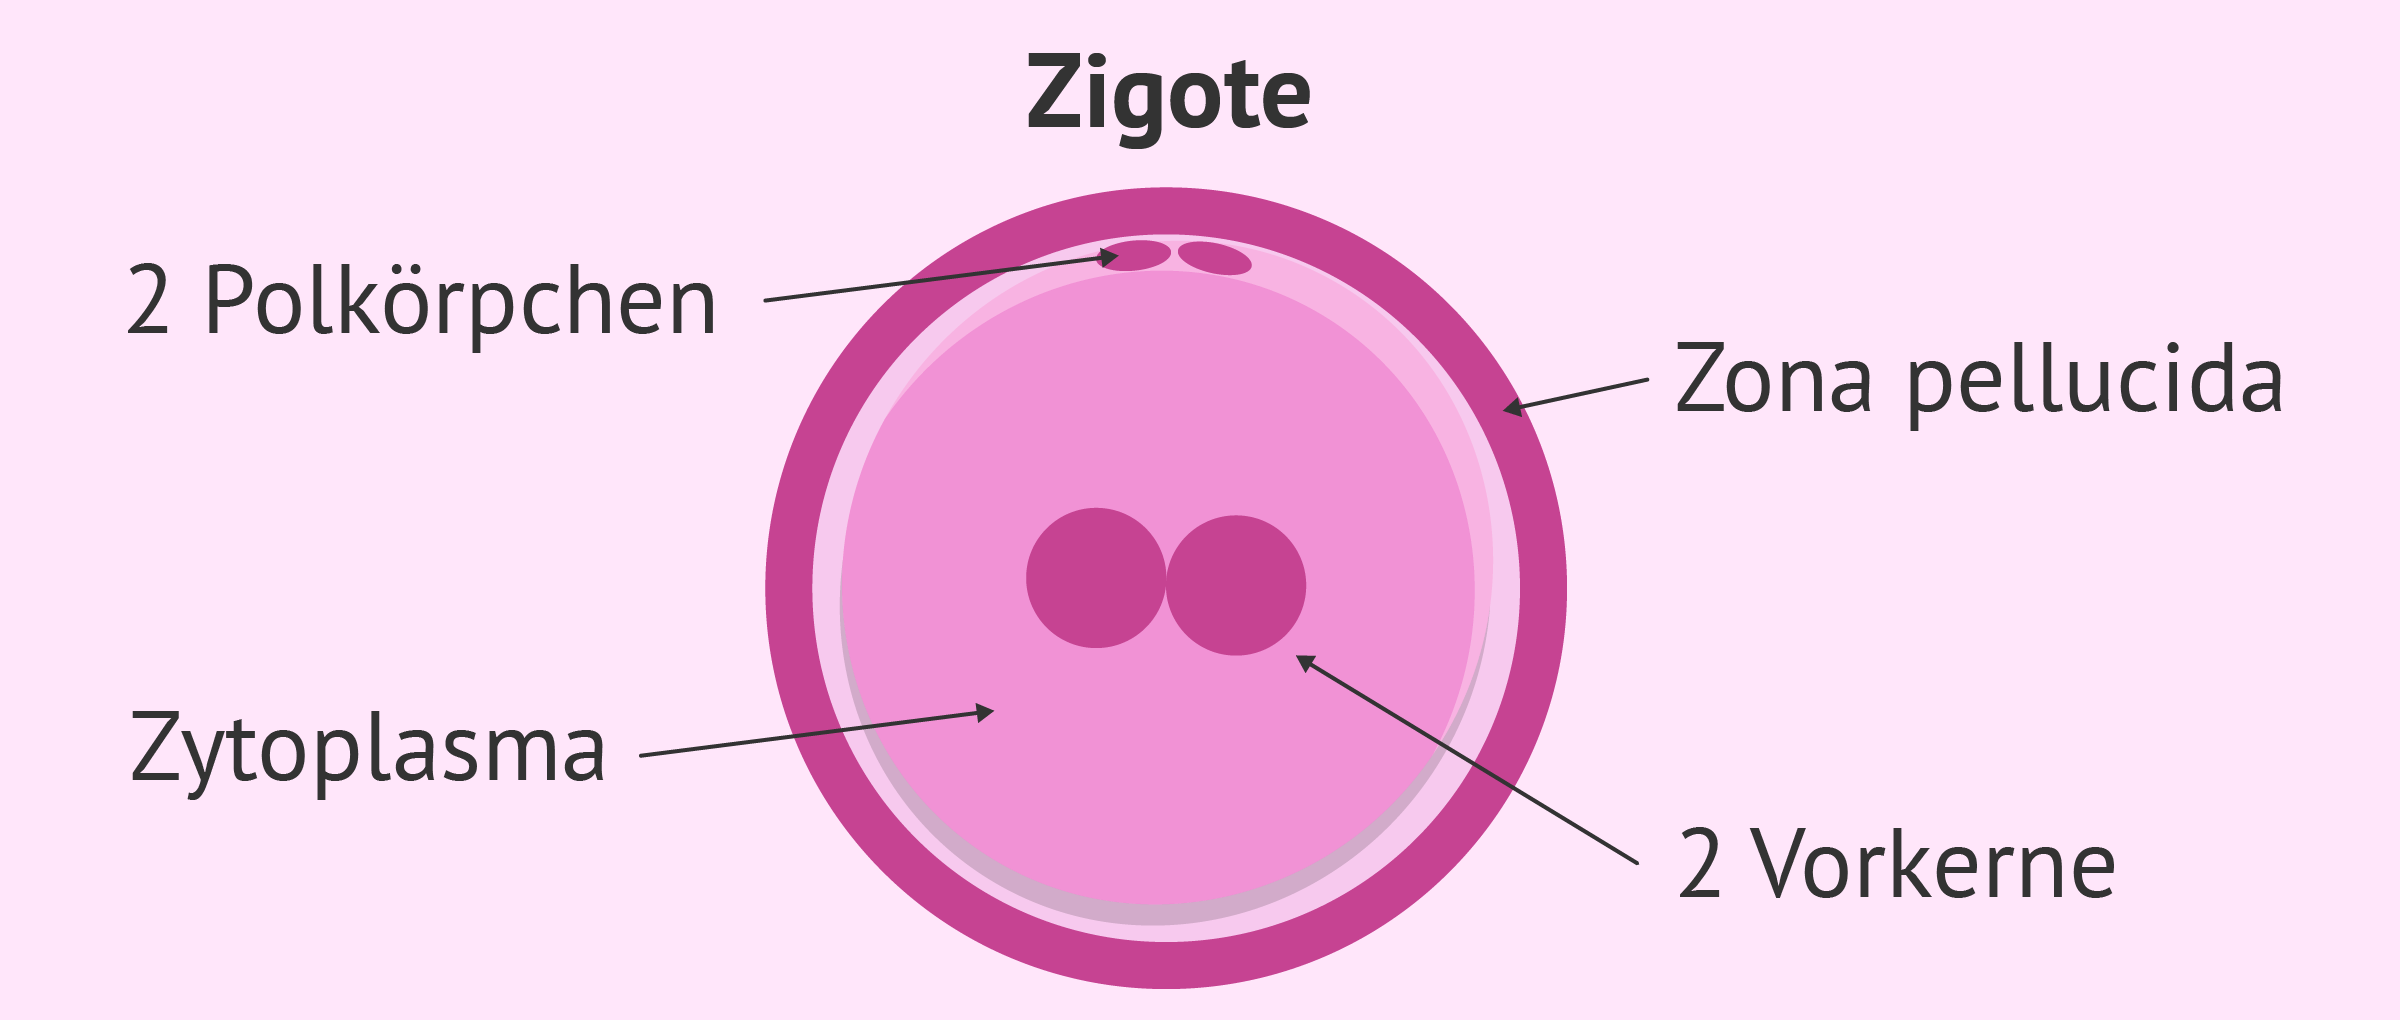 Embryostadium: Zygote